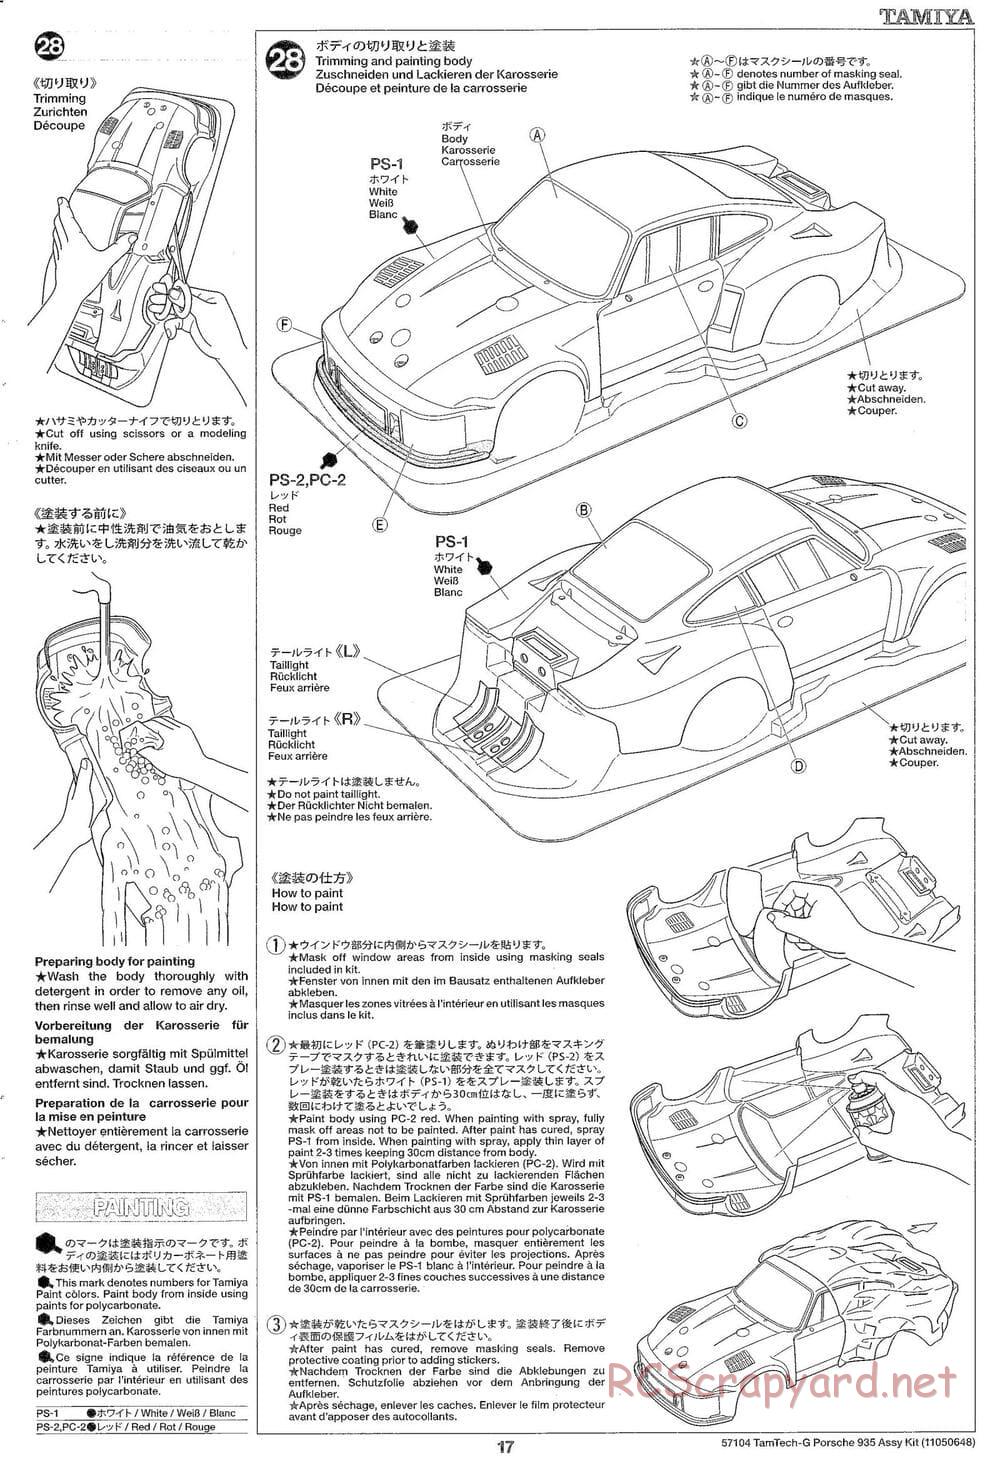 Tamiya - Porsche 935 Martini - GT-01 Chassis - Manual - Page 17